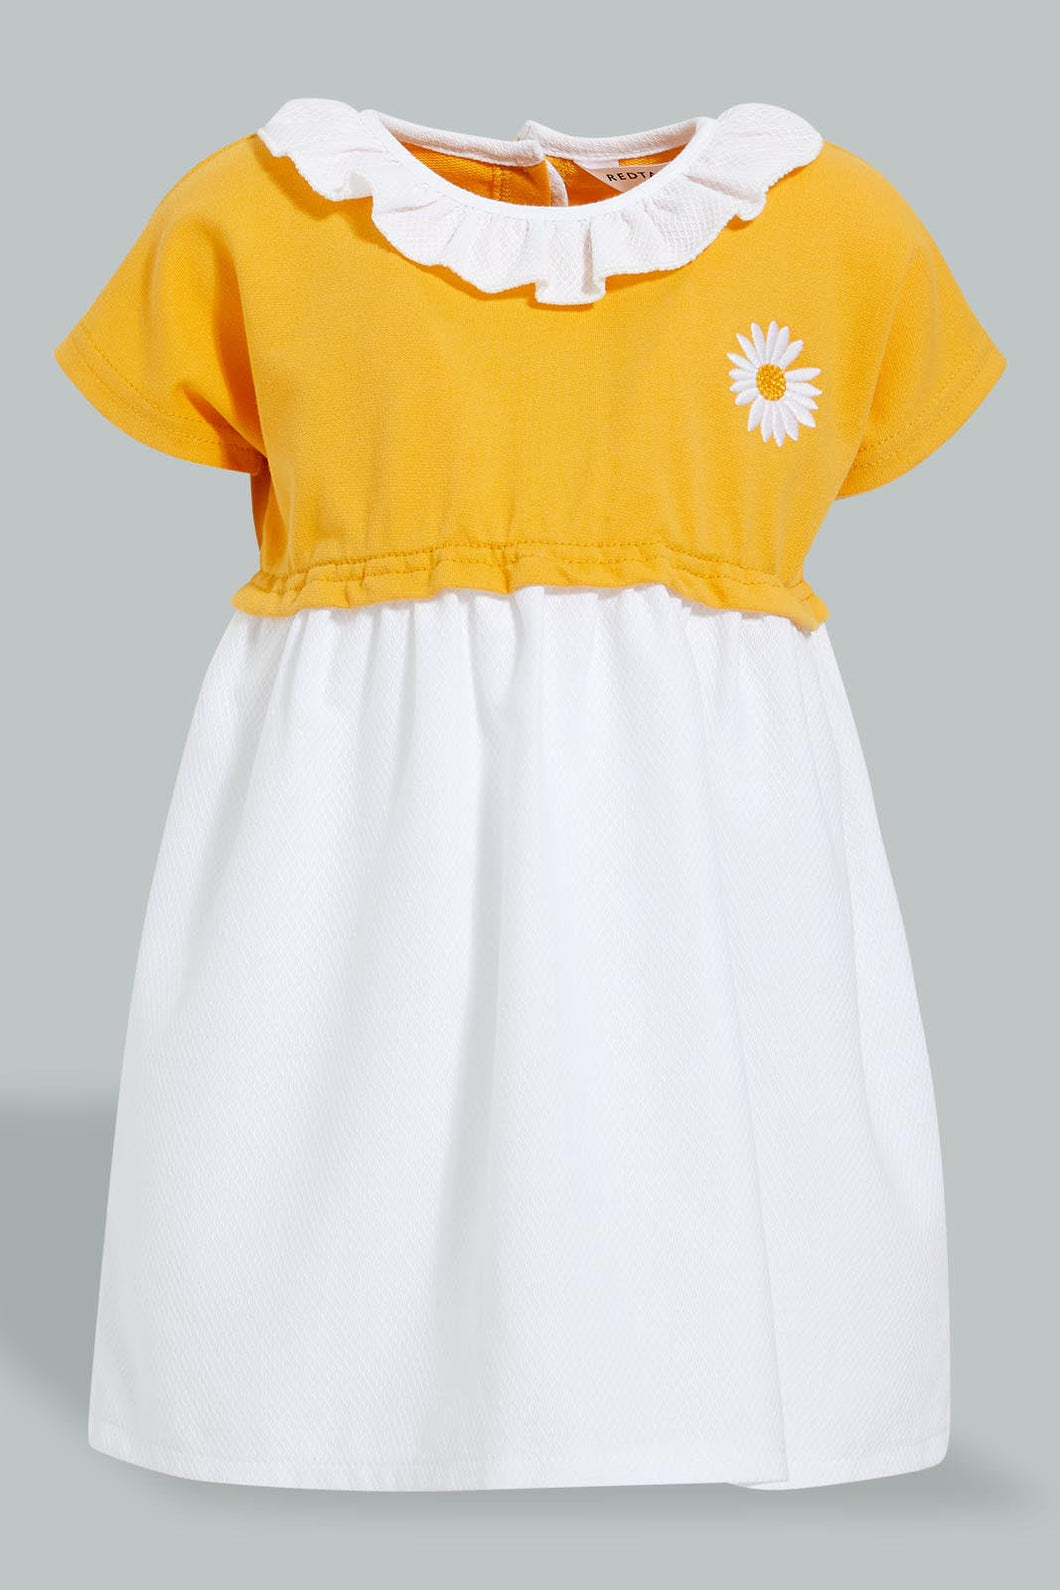 Yellow And White Frill Collar Top Dress فستان باللون الأصفر والأبيض بياقة مكشكشة